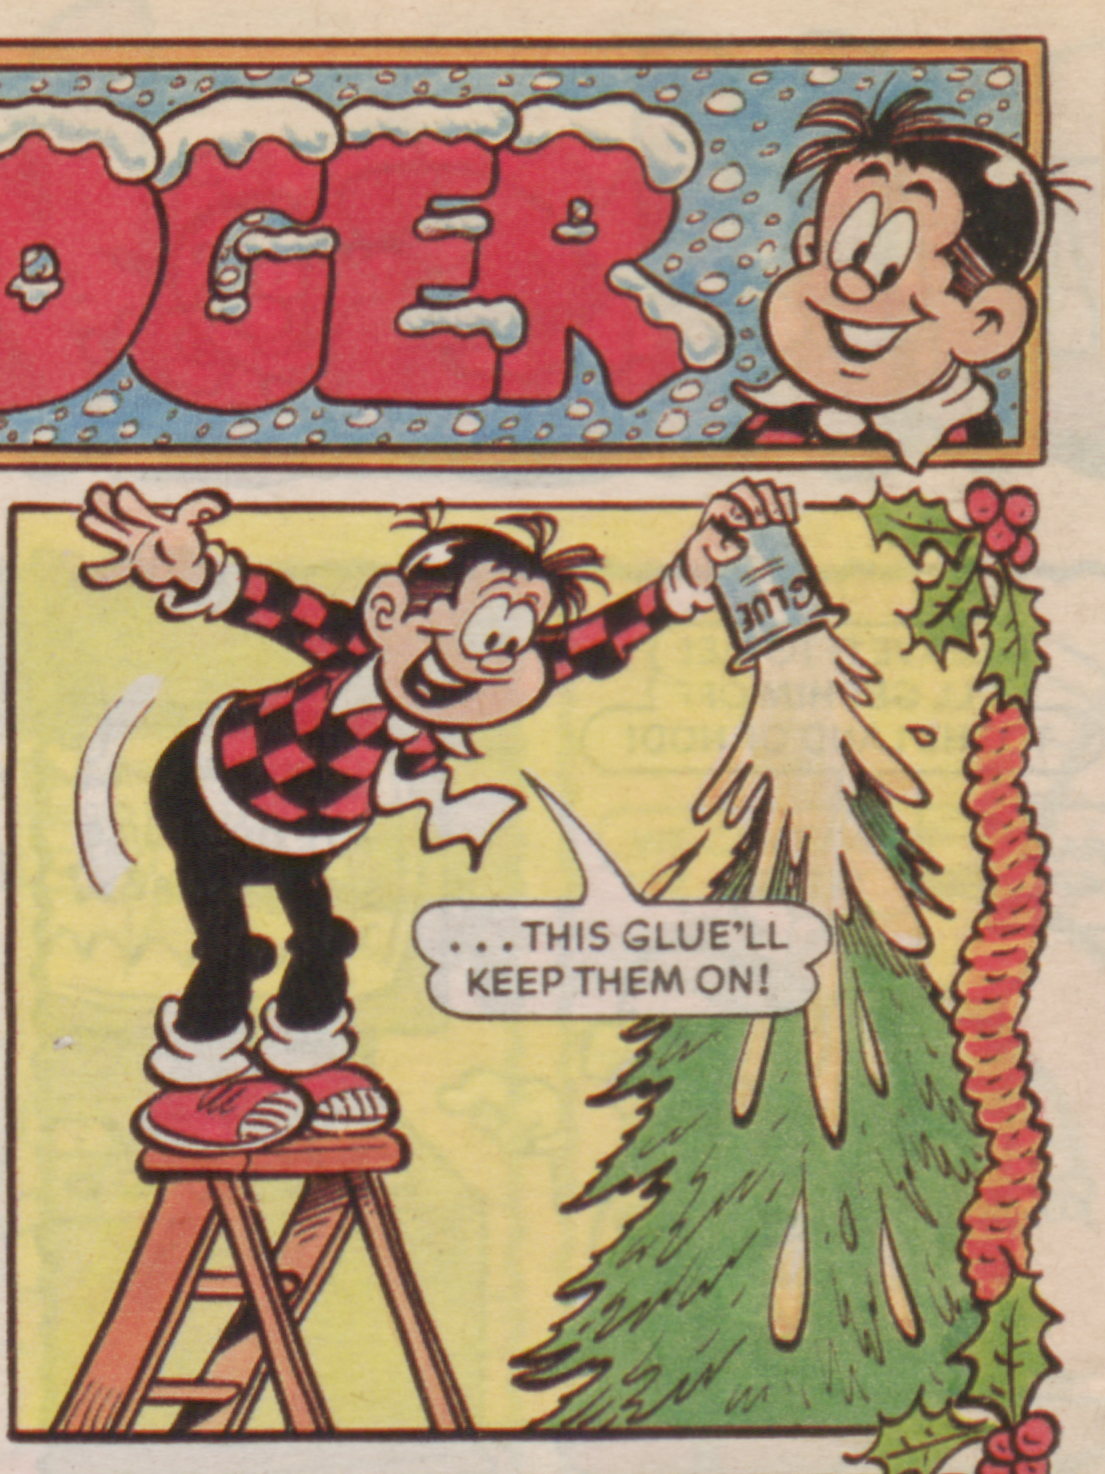 Roger the Dodger Christmas 1993